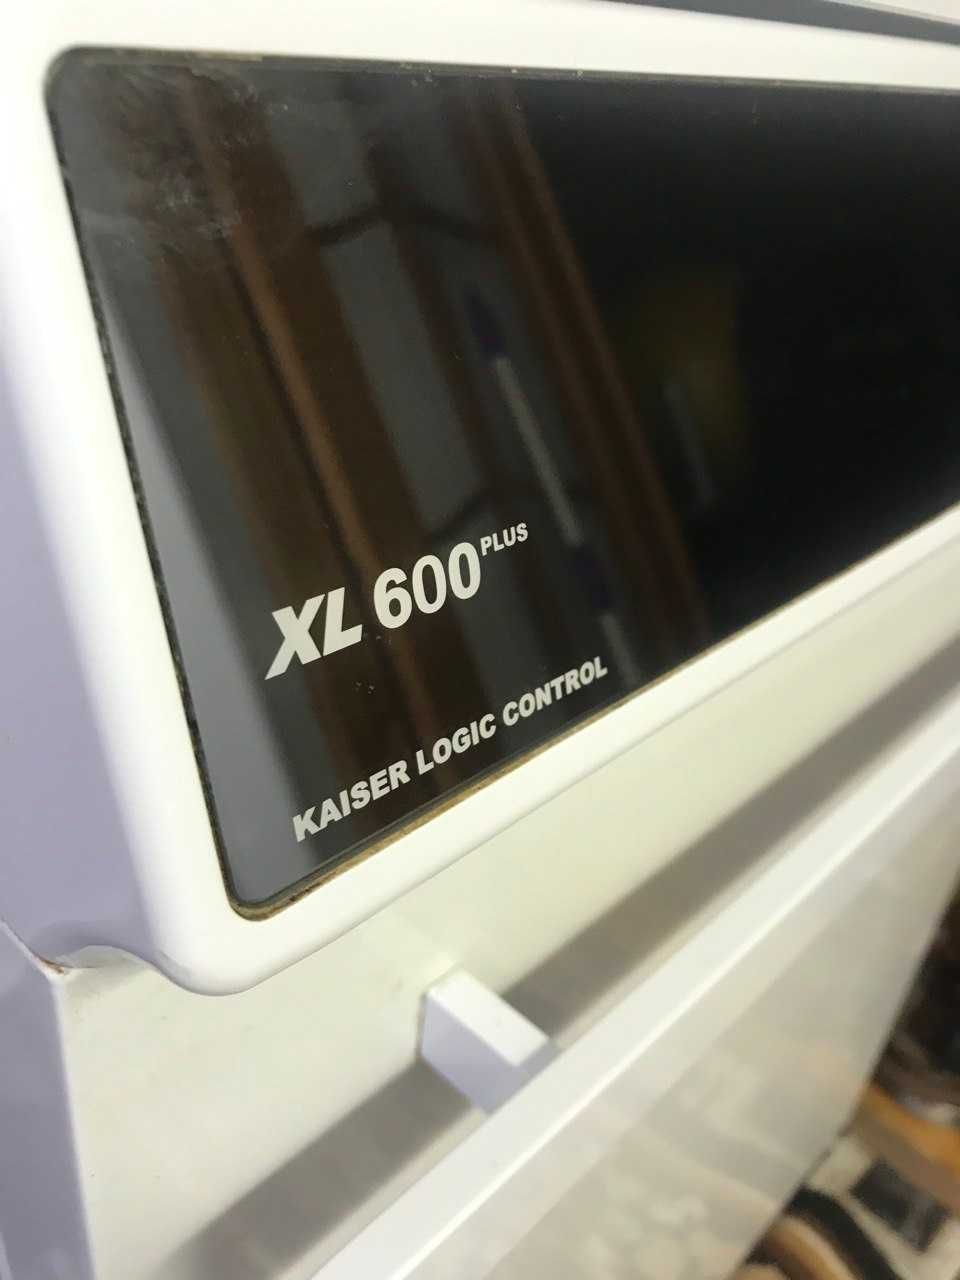 Посудомоечная машина Kaiser S 6062 XL W